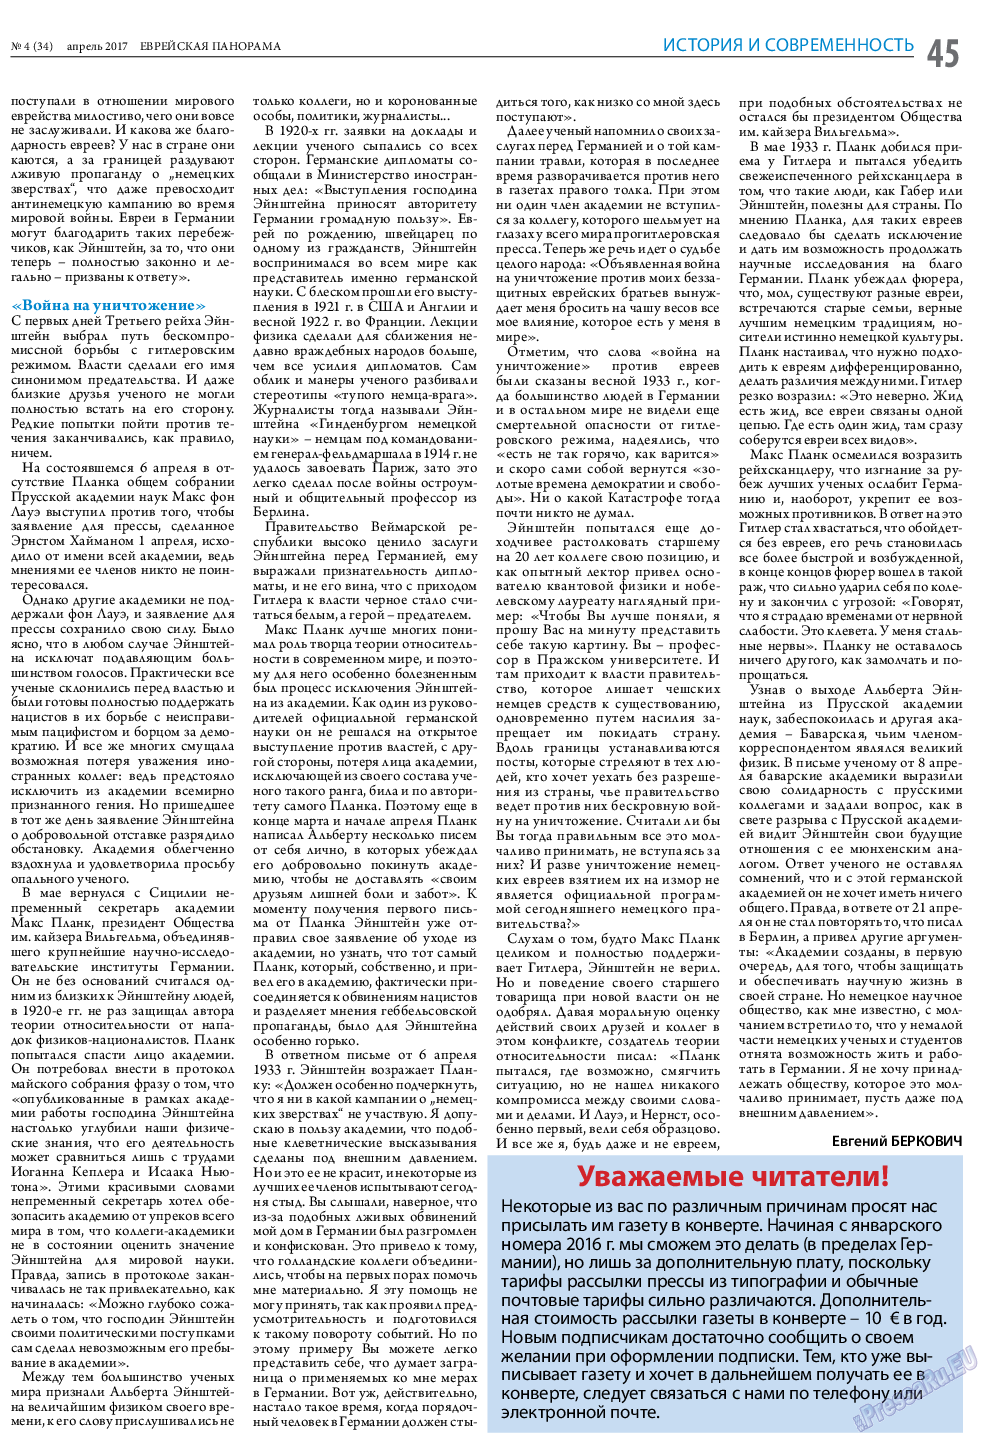 Еврейская панорама, газета. 2017 №4 стр.45